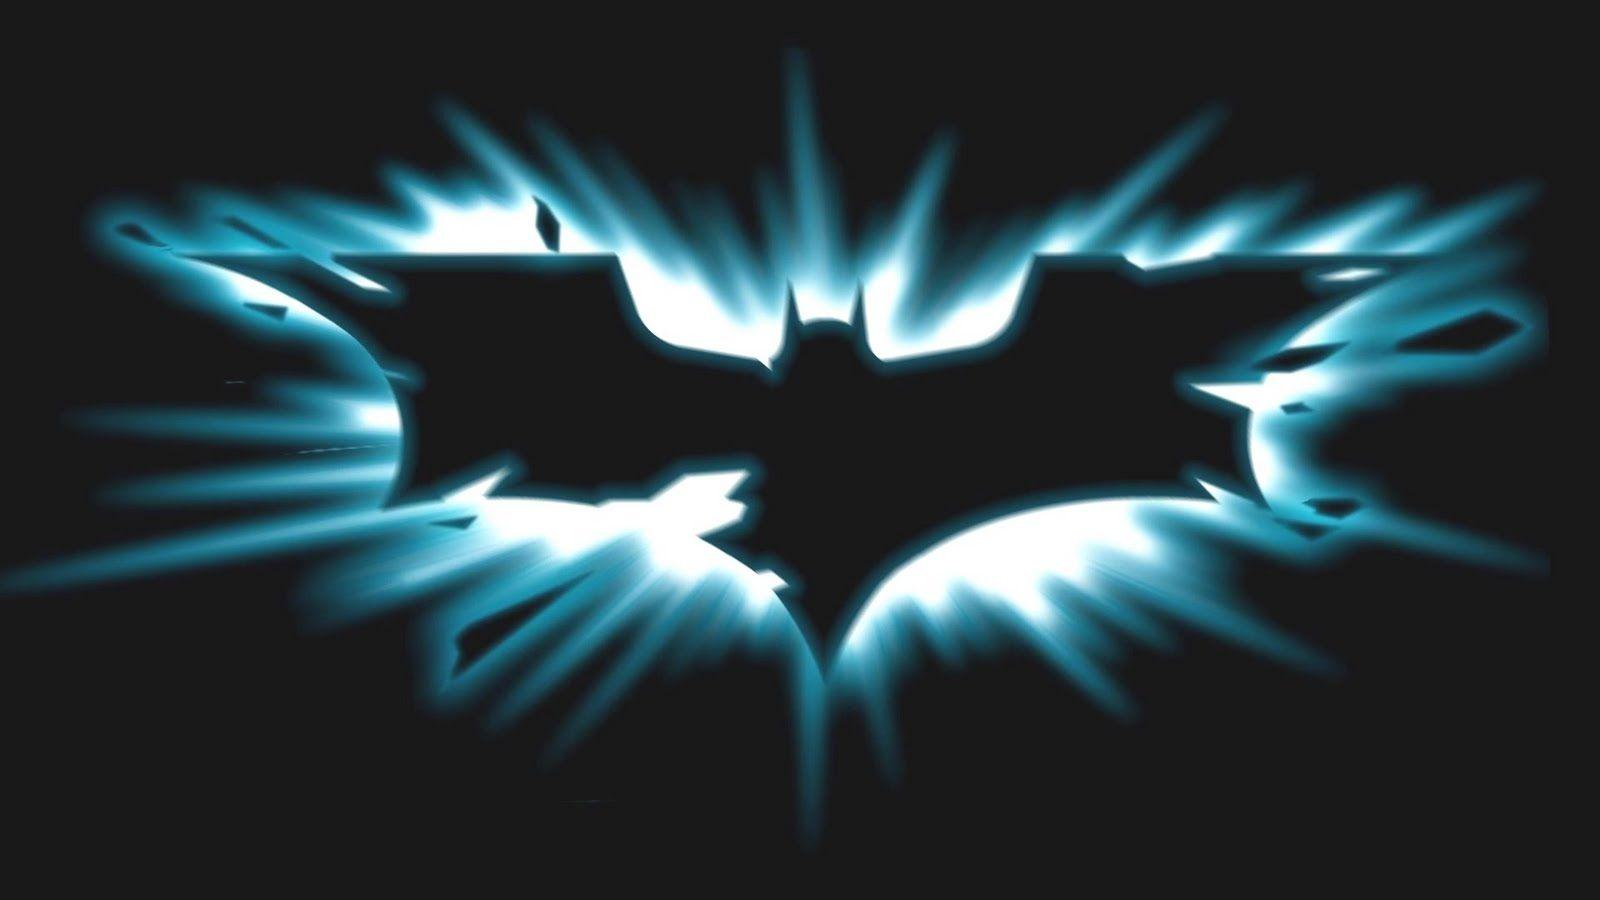 Cool Batman Logo - Free Batman Logo Wallpaper, Download Free Clip Art, Free Clip Art on ...